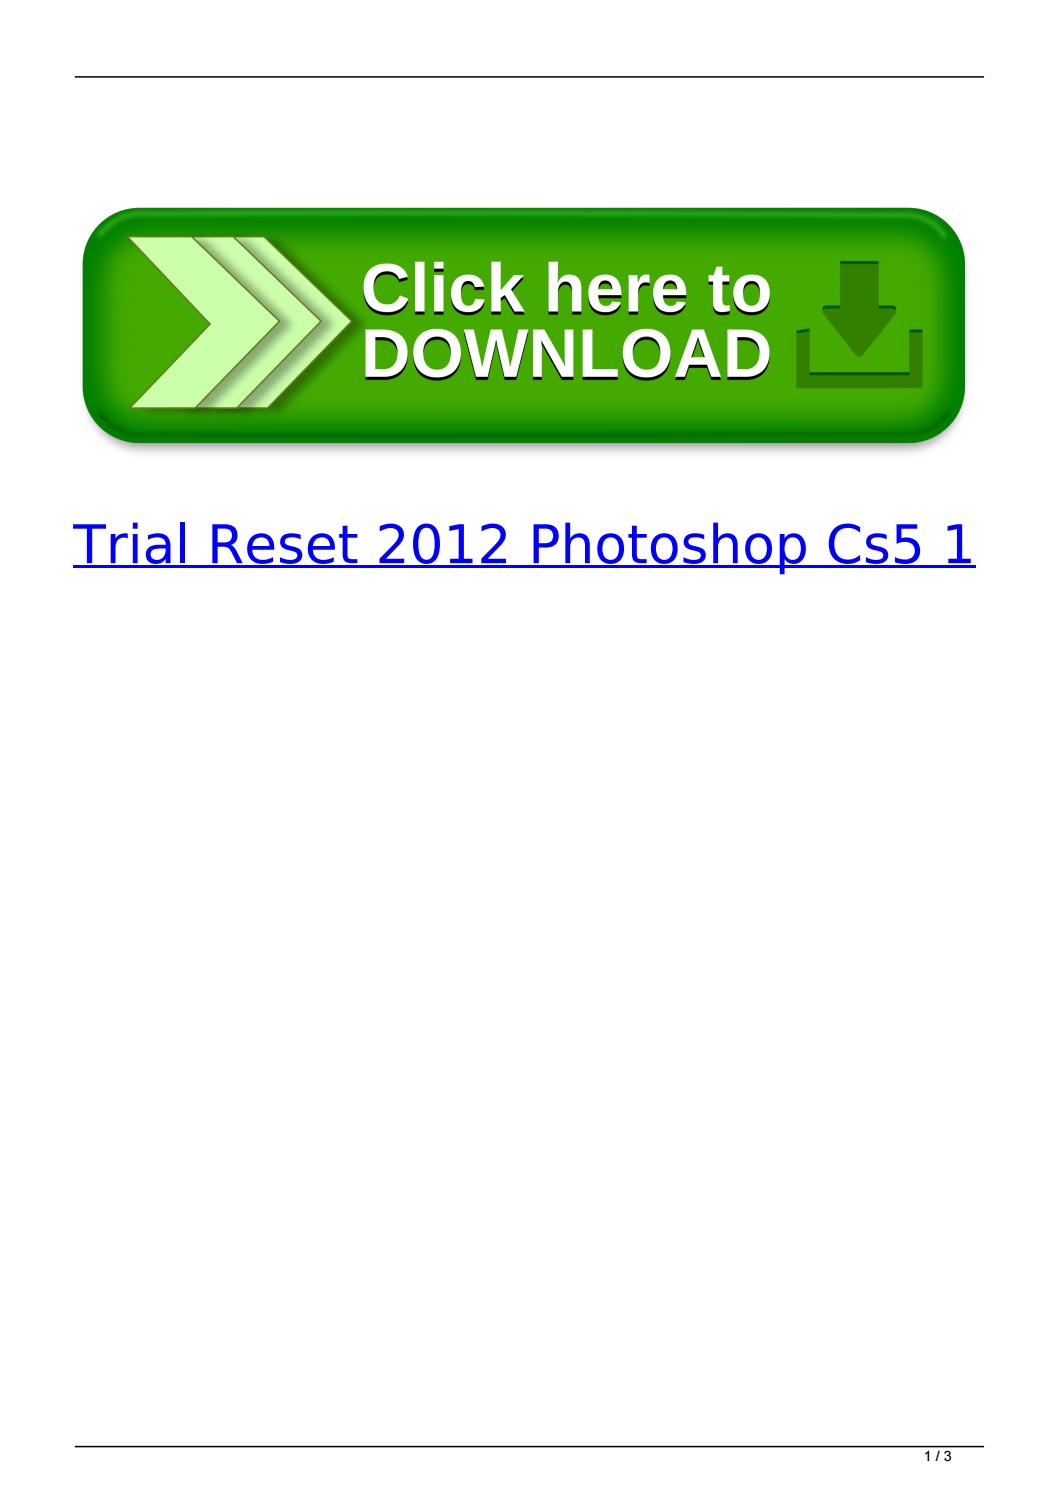 Adobe Photoshop Cs5 Trial Mac Download